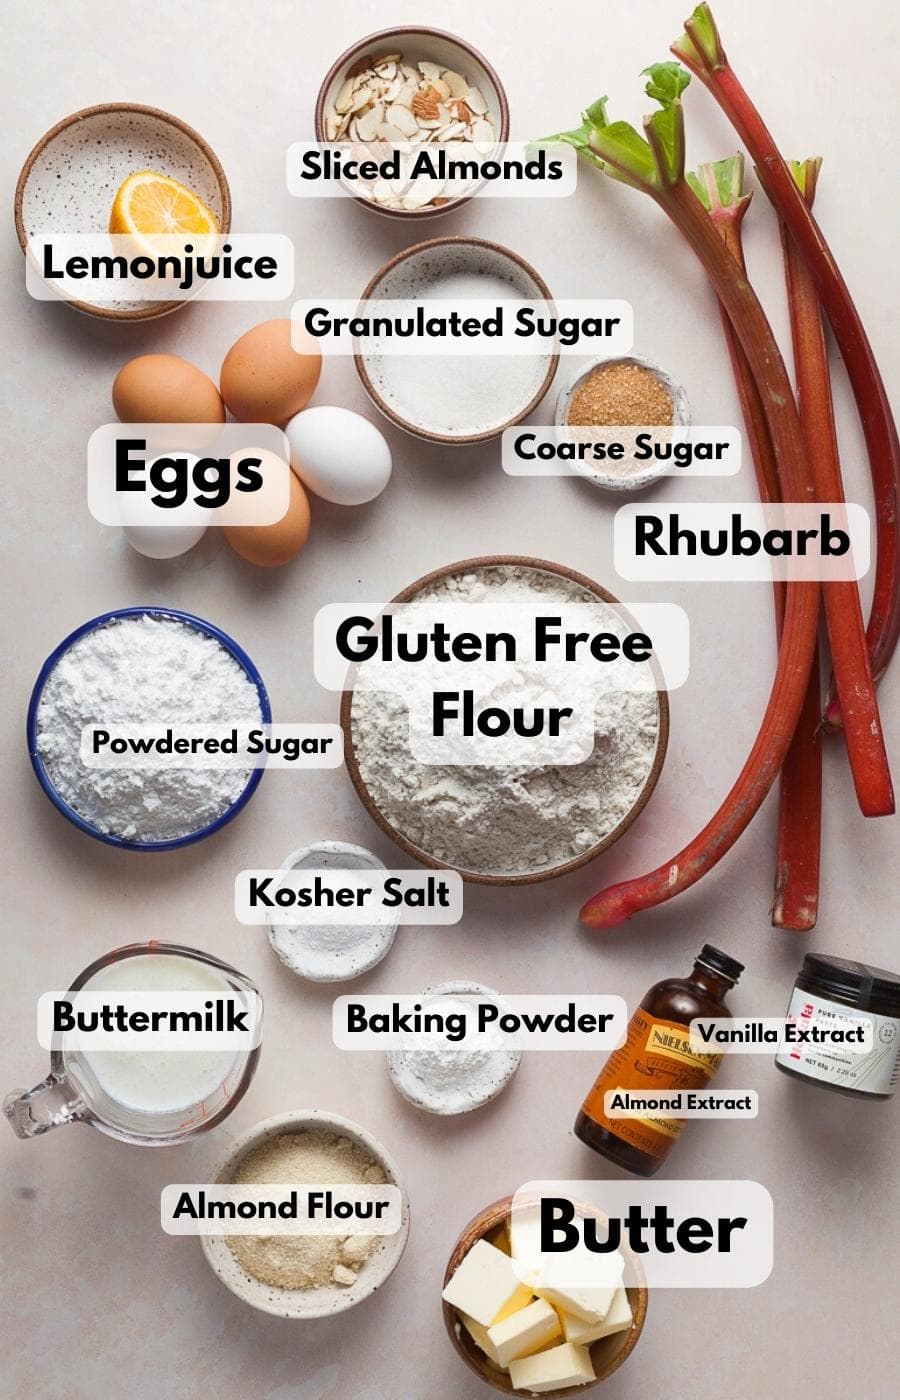 ingredients needed to make a gluten free rhubarb cake